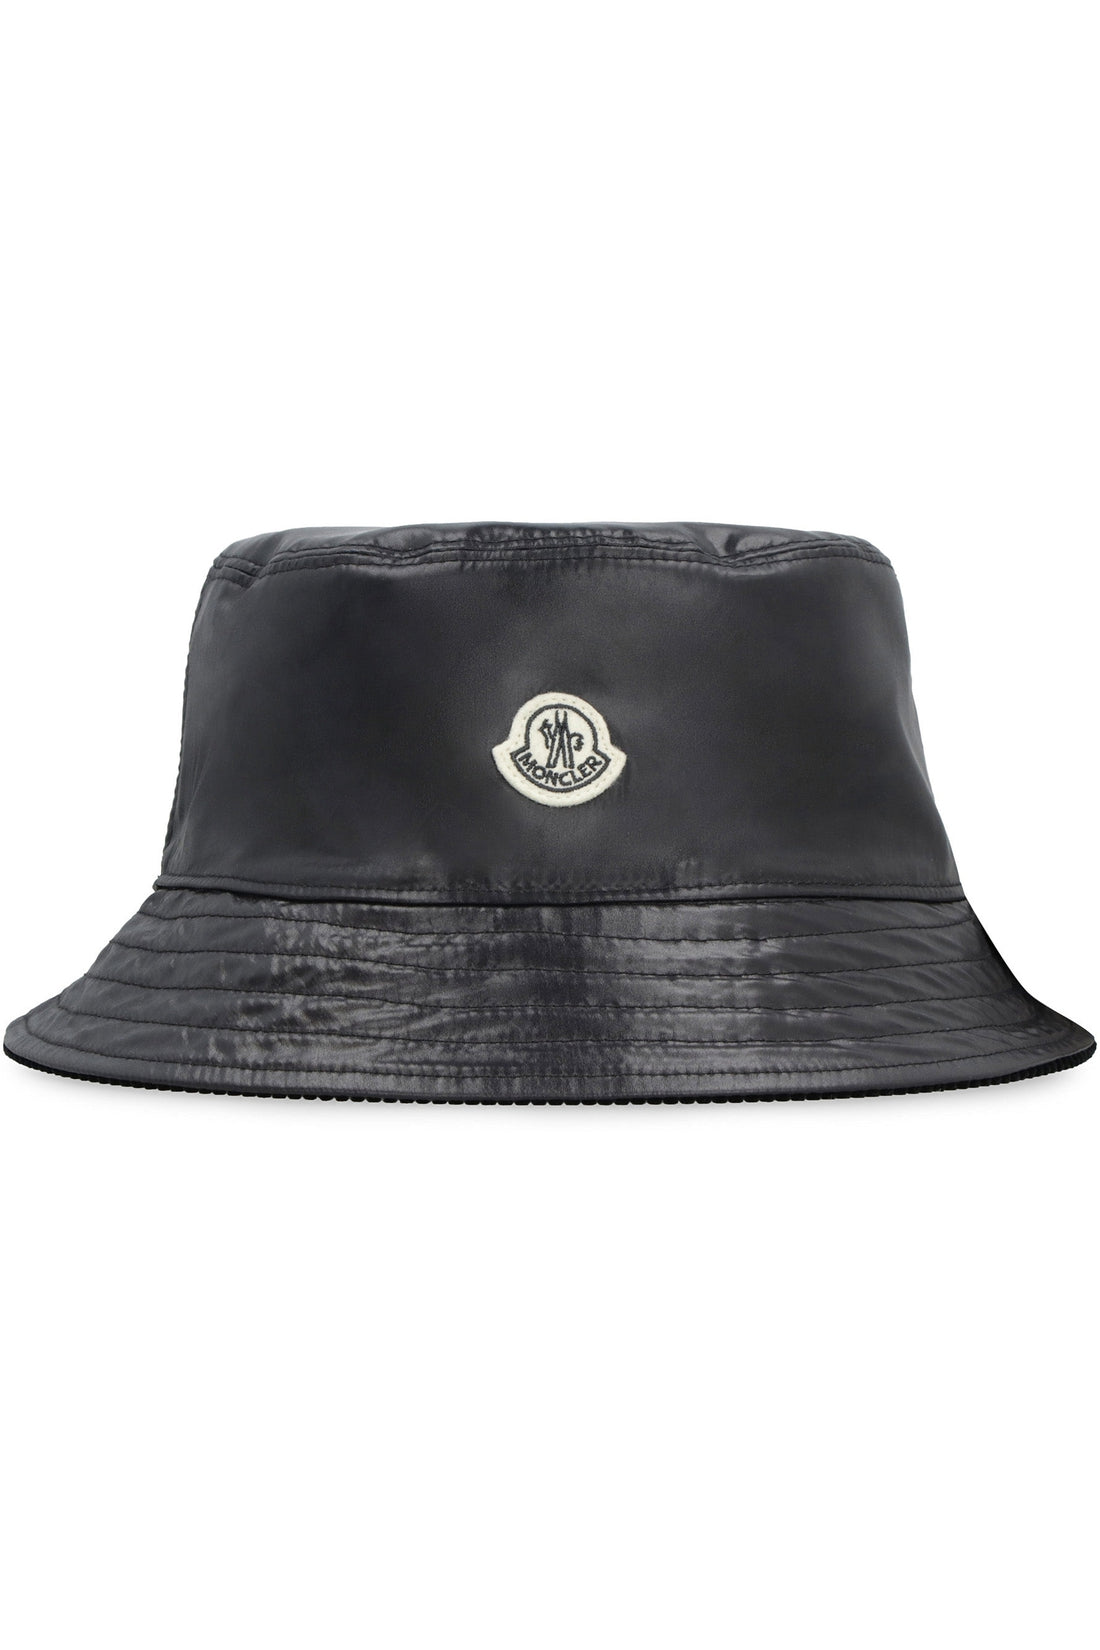 Moncler Genius-OUTLET-SALE-7 Moncler FRGMT Hiroshi Fujuwara - Reversible bucket hat-ARCHIVIST